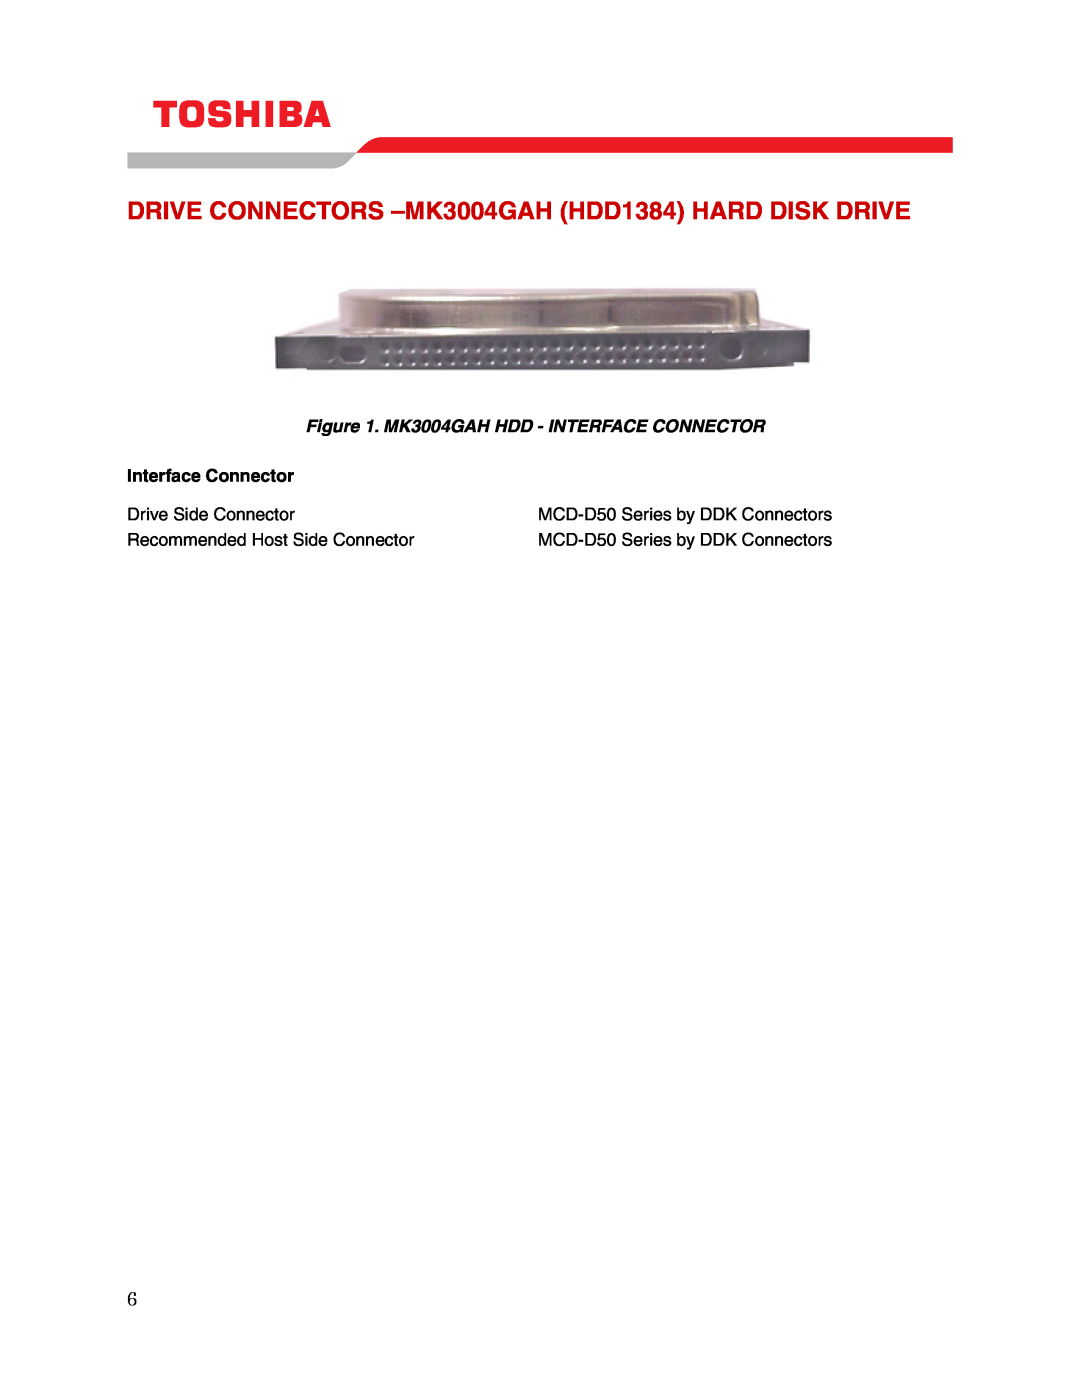 Toshiba DRIVE CONNECTORS -MK3004GAH HDD1384 HARD DISK DRIVE, MK3004GAH HDD - INTERFACE CONNECTOR, Interface Connector 